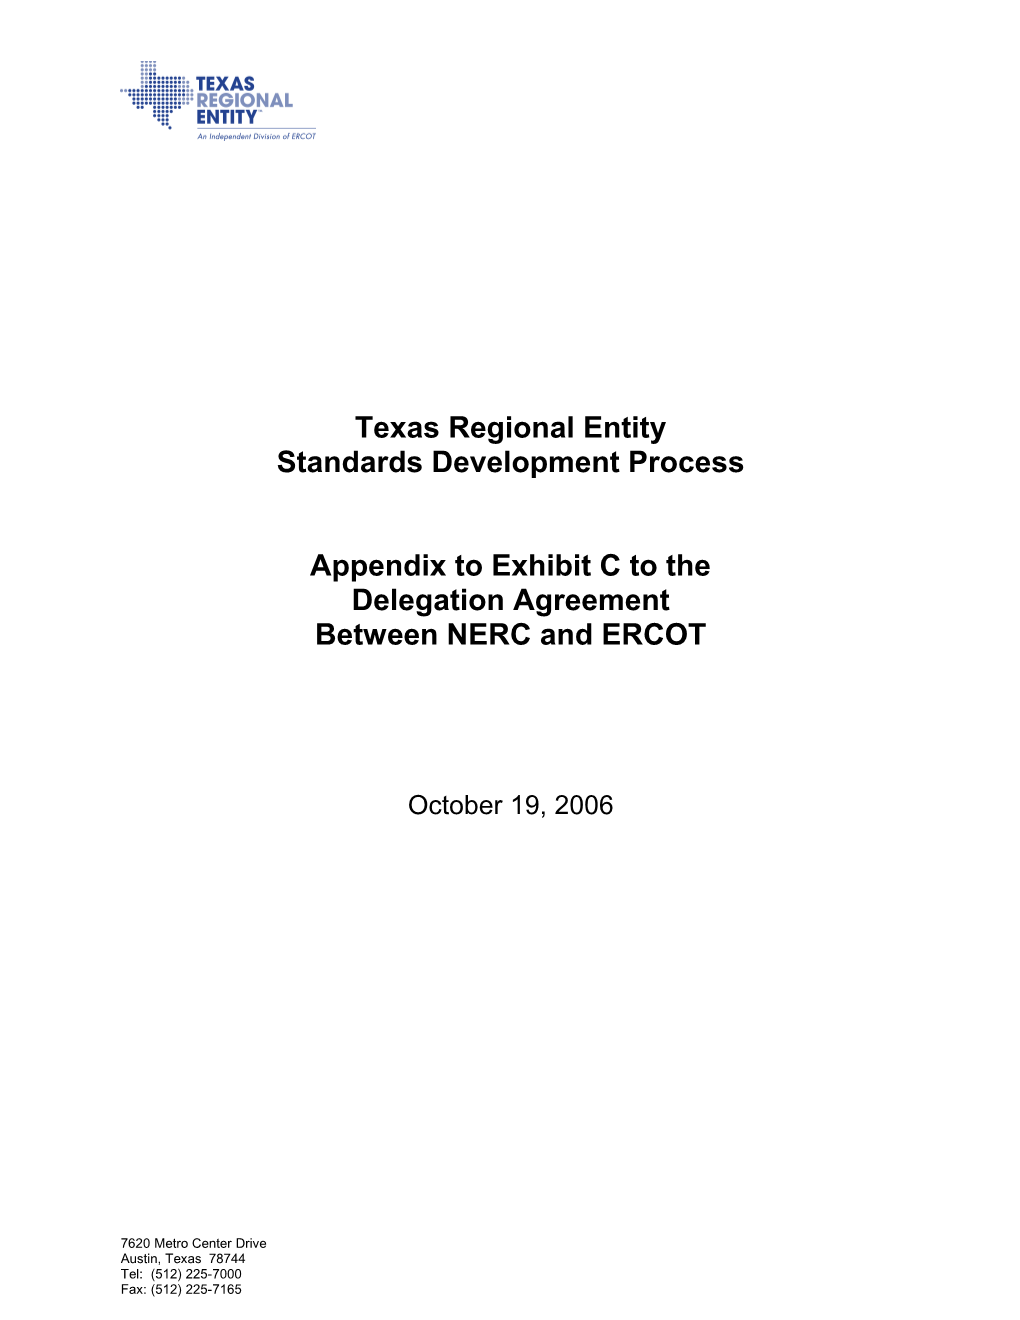 Texas RE Regional Standards Development Process